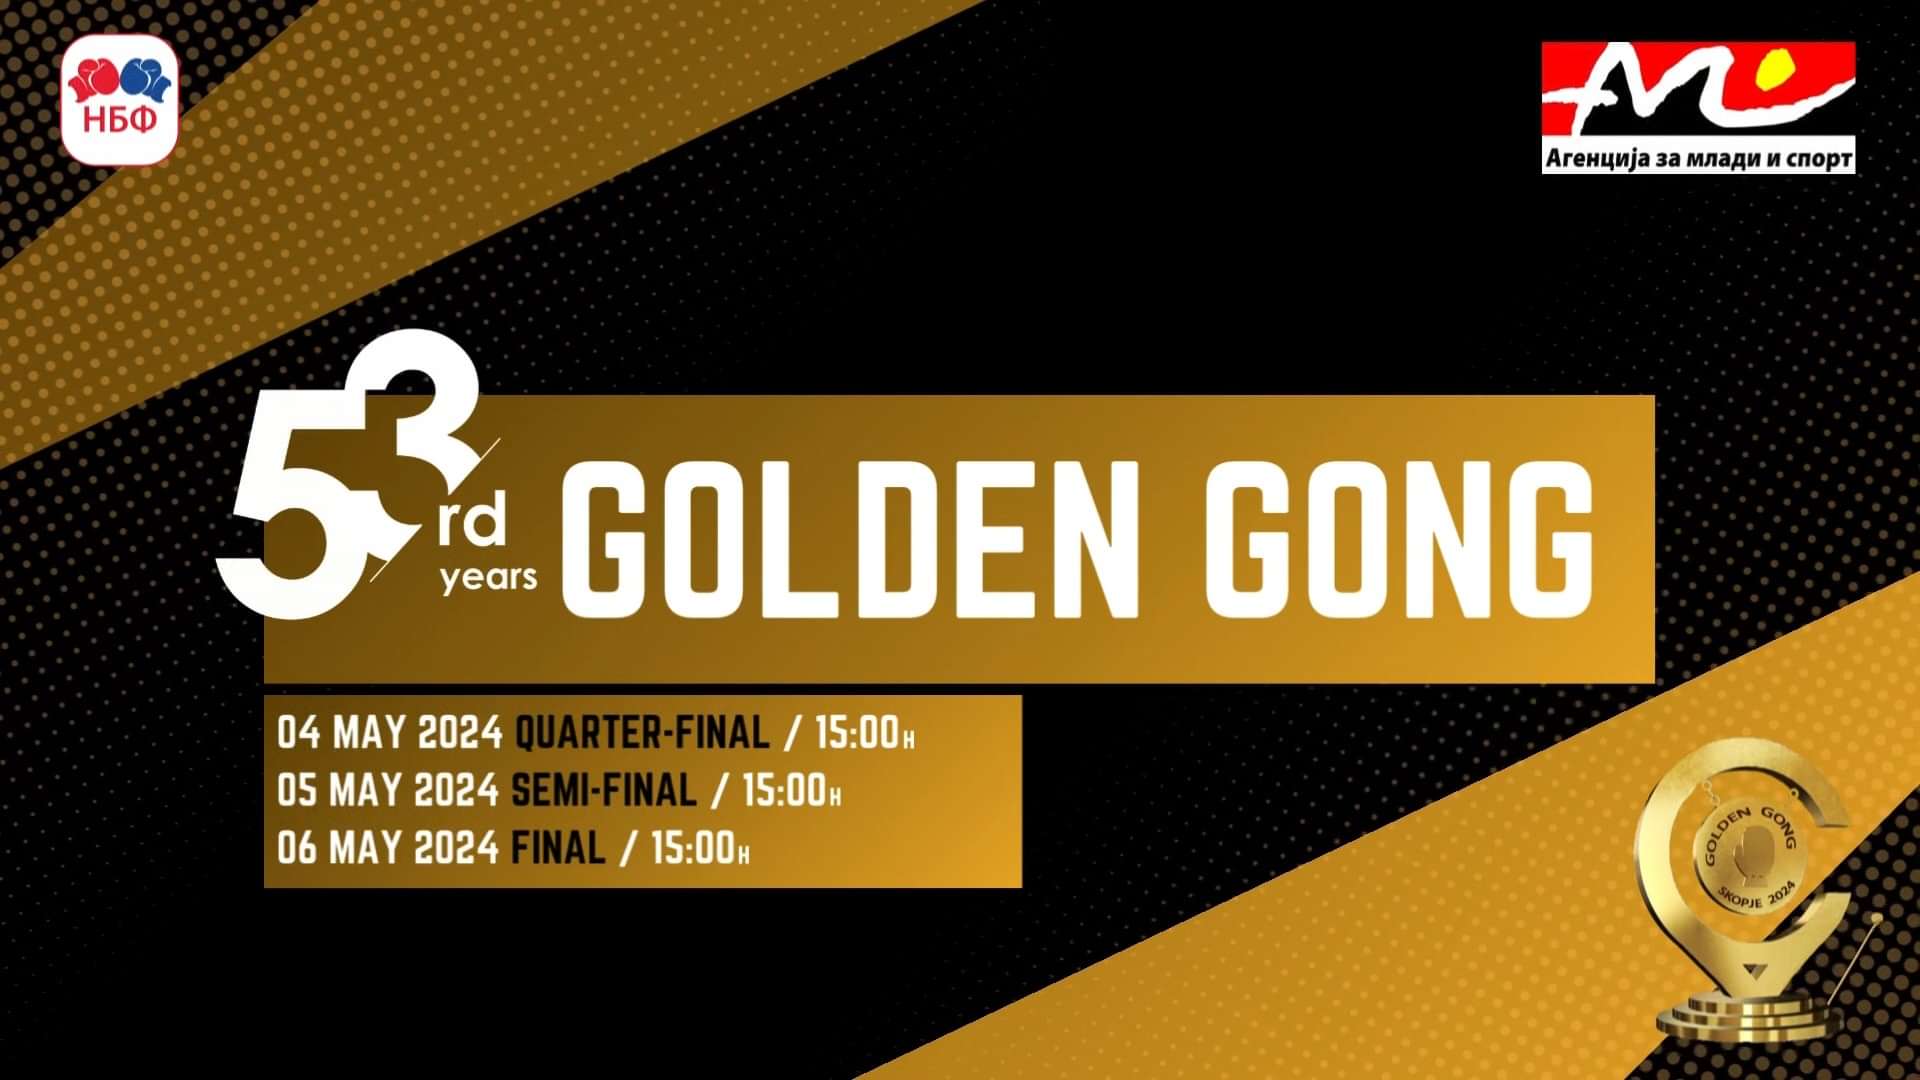 Golden Gong tournament will be held next weekend